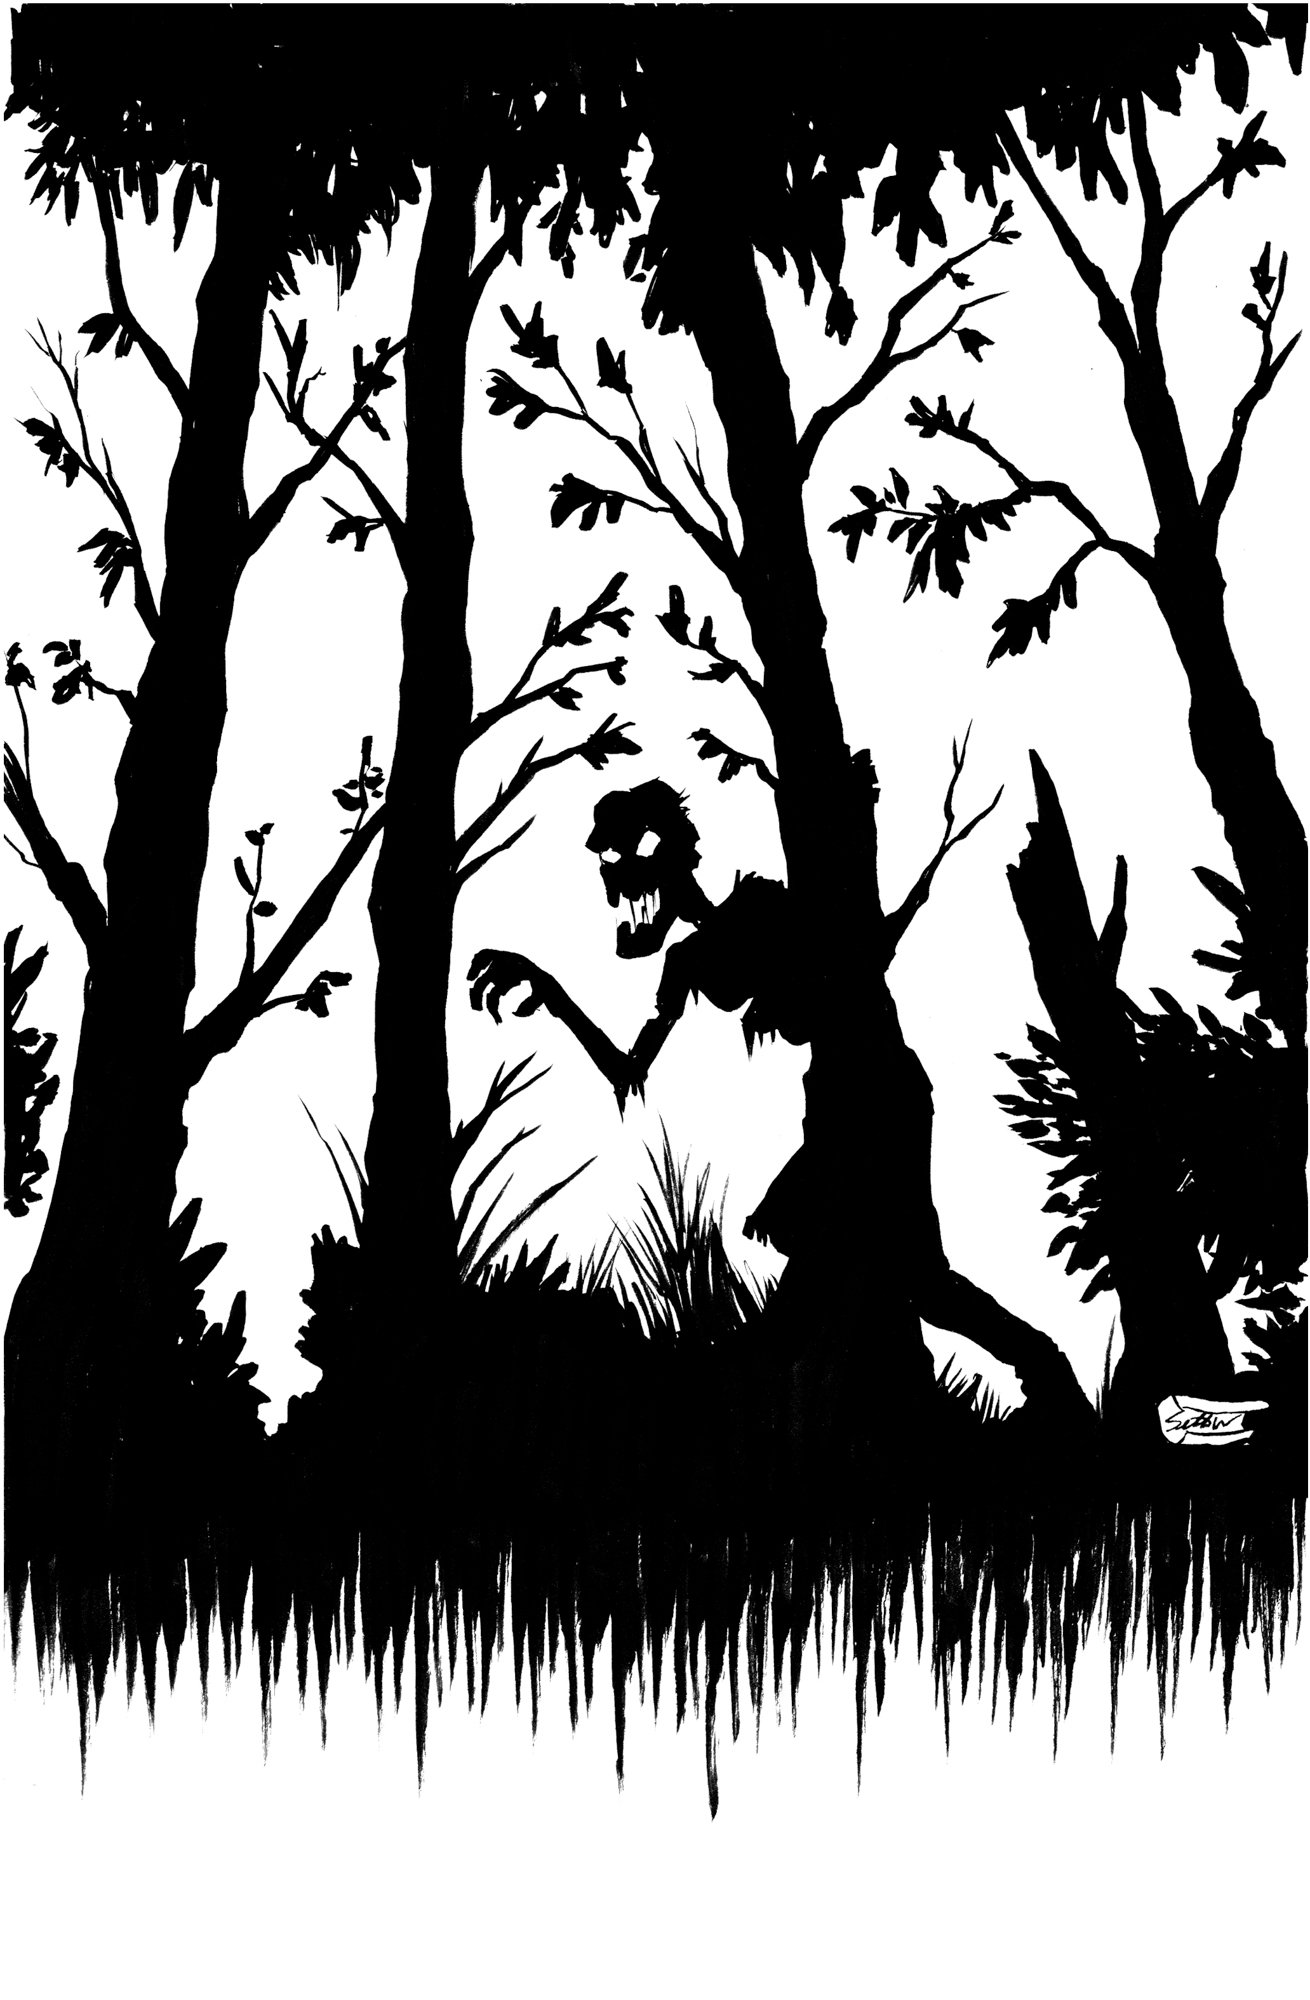 2seth wolfshorndl joplin mo comic artist featured by joplin toad_.jpg